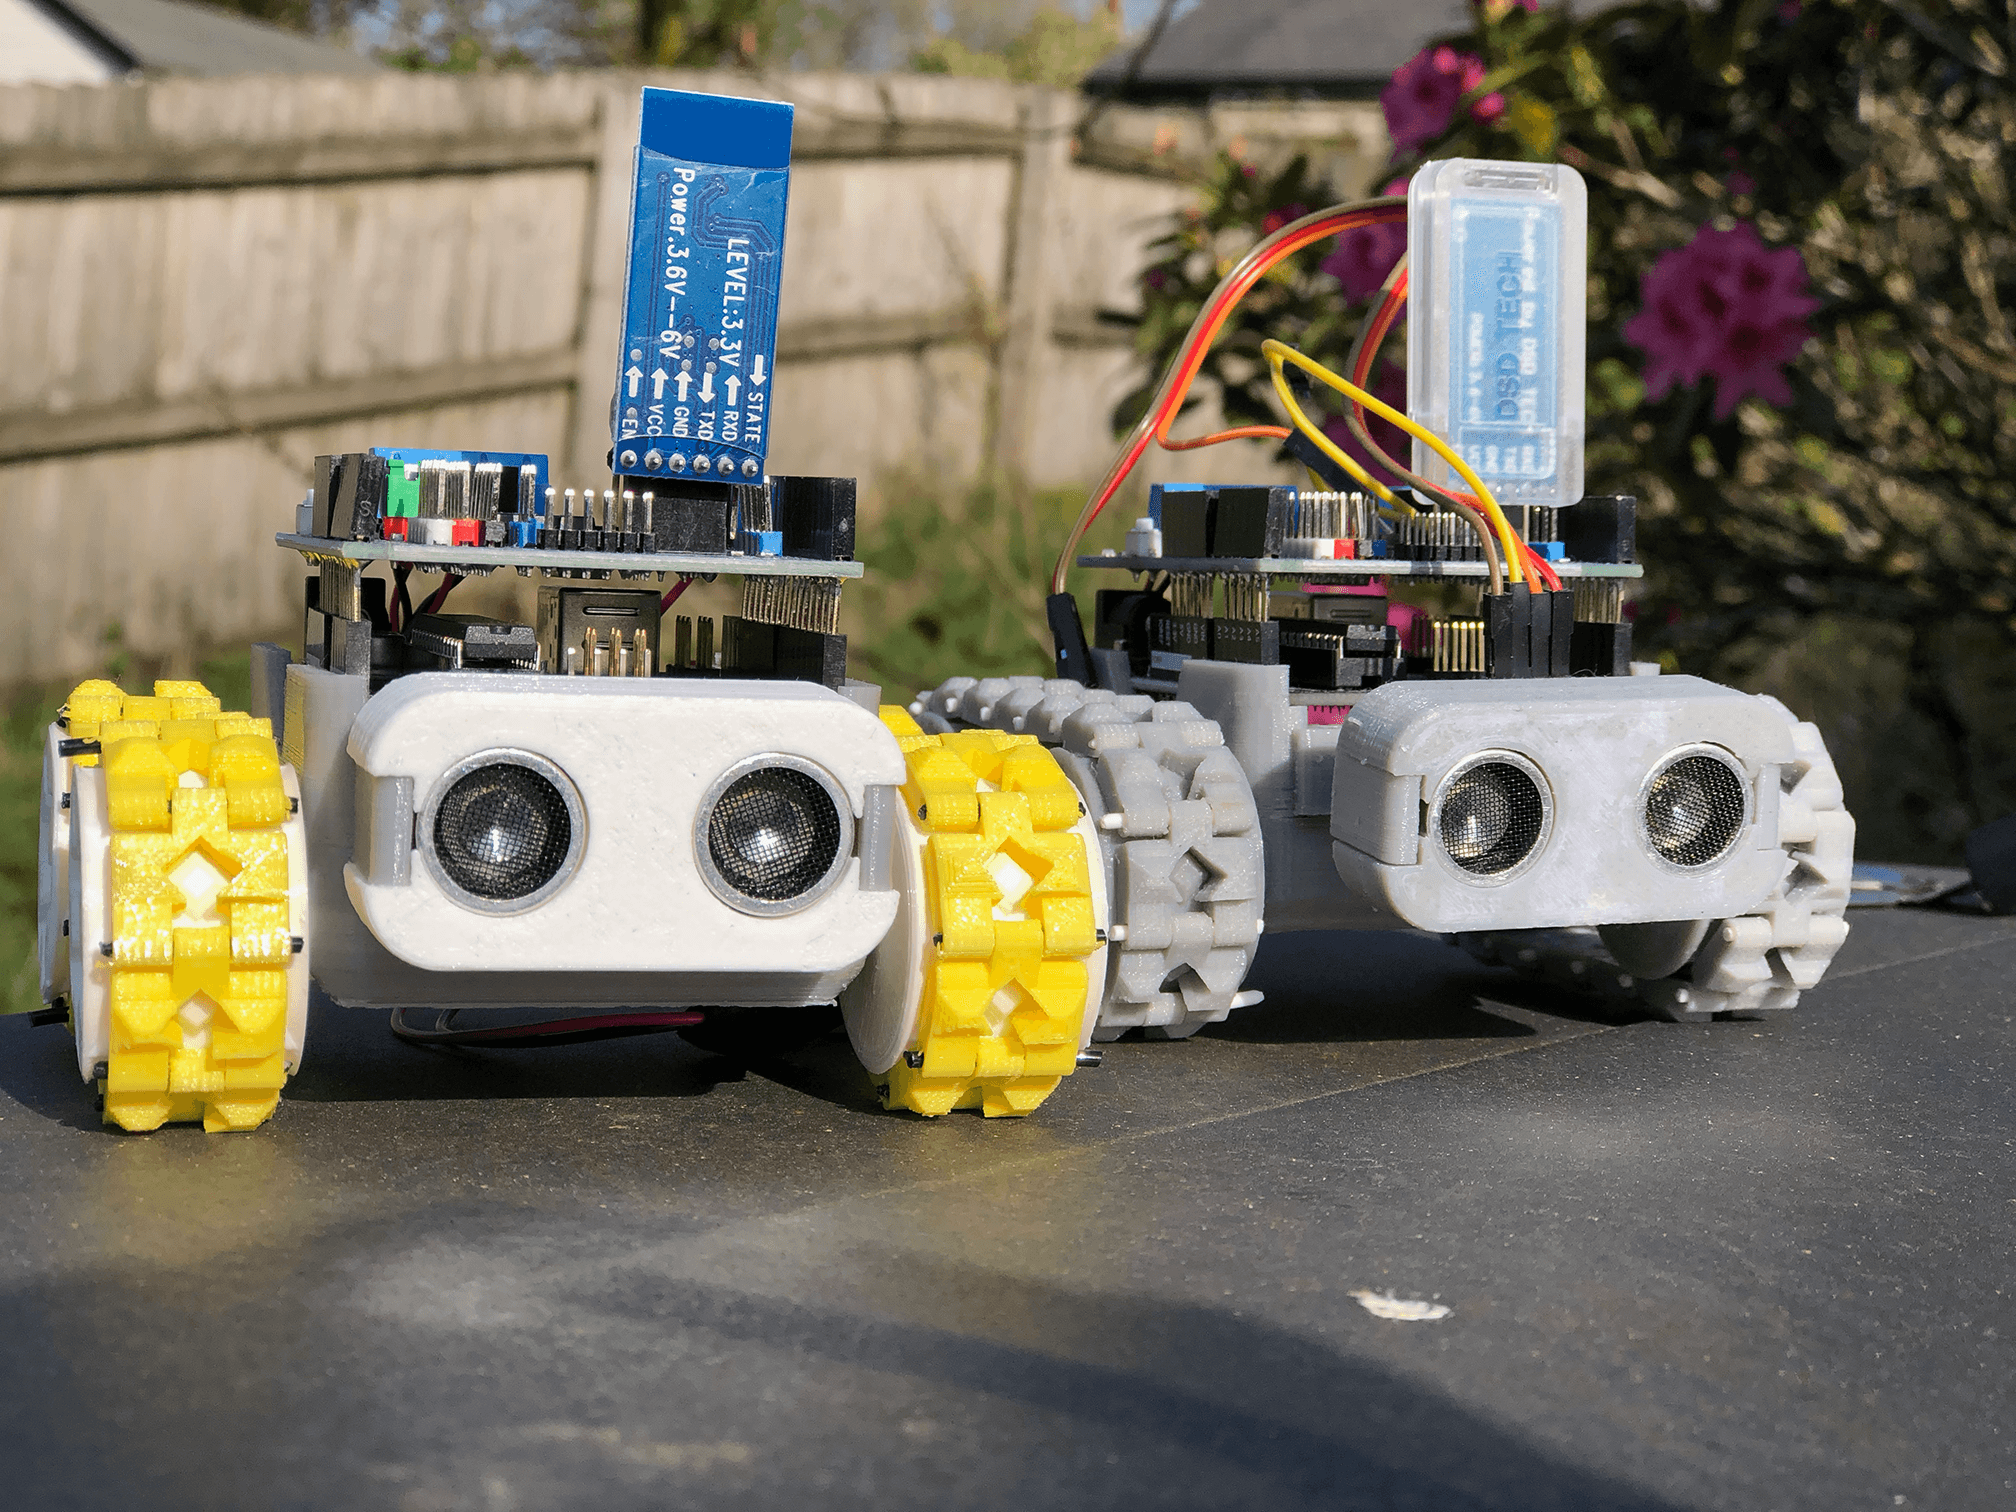 Two wheeled robots